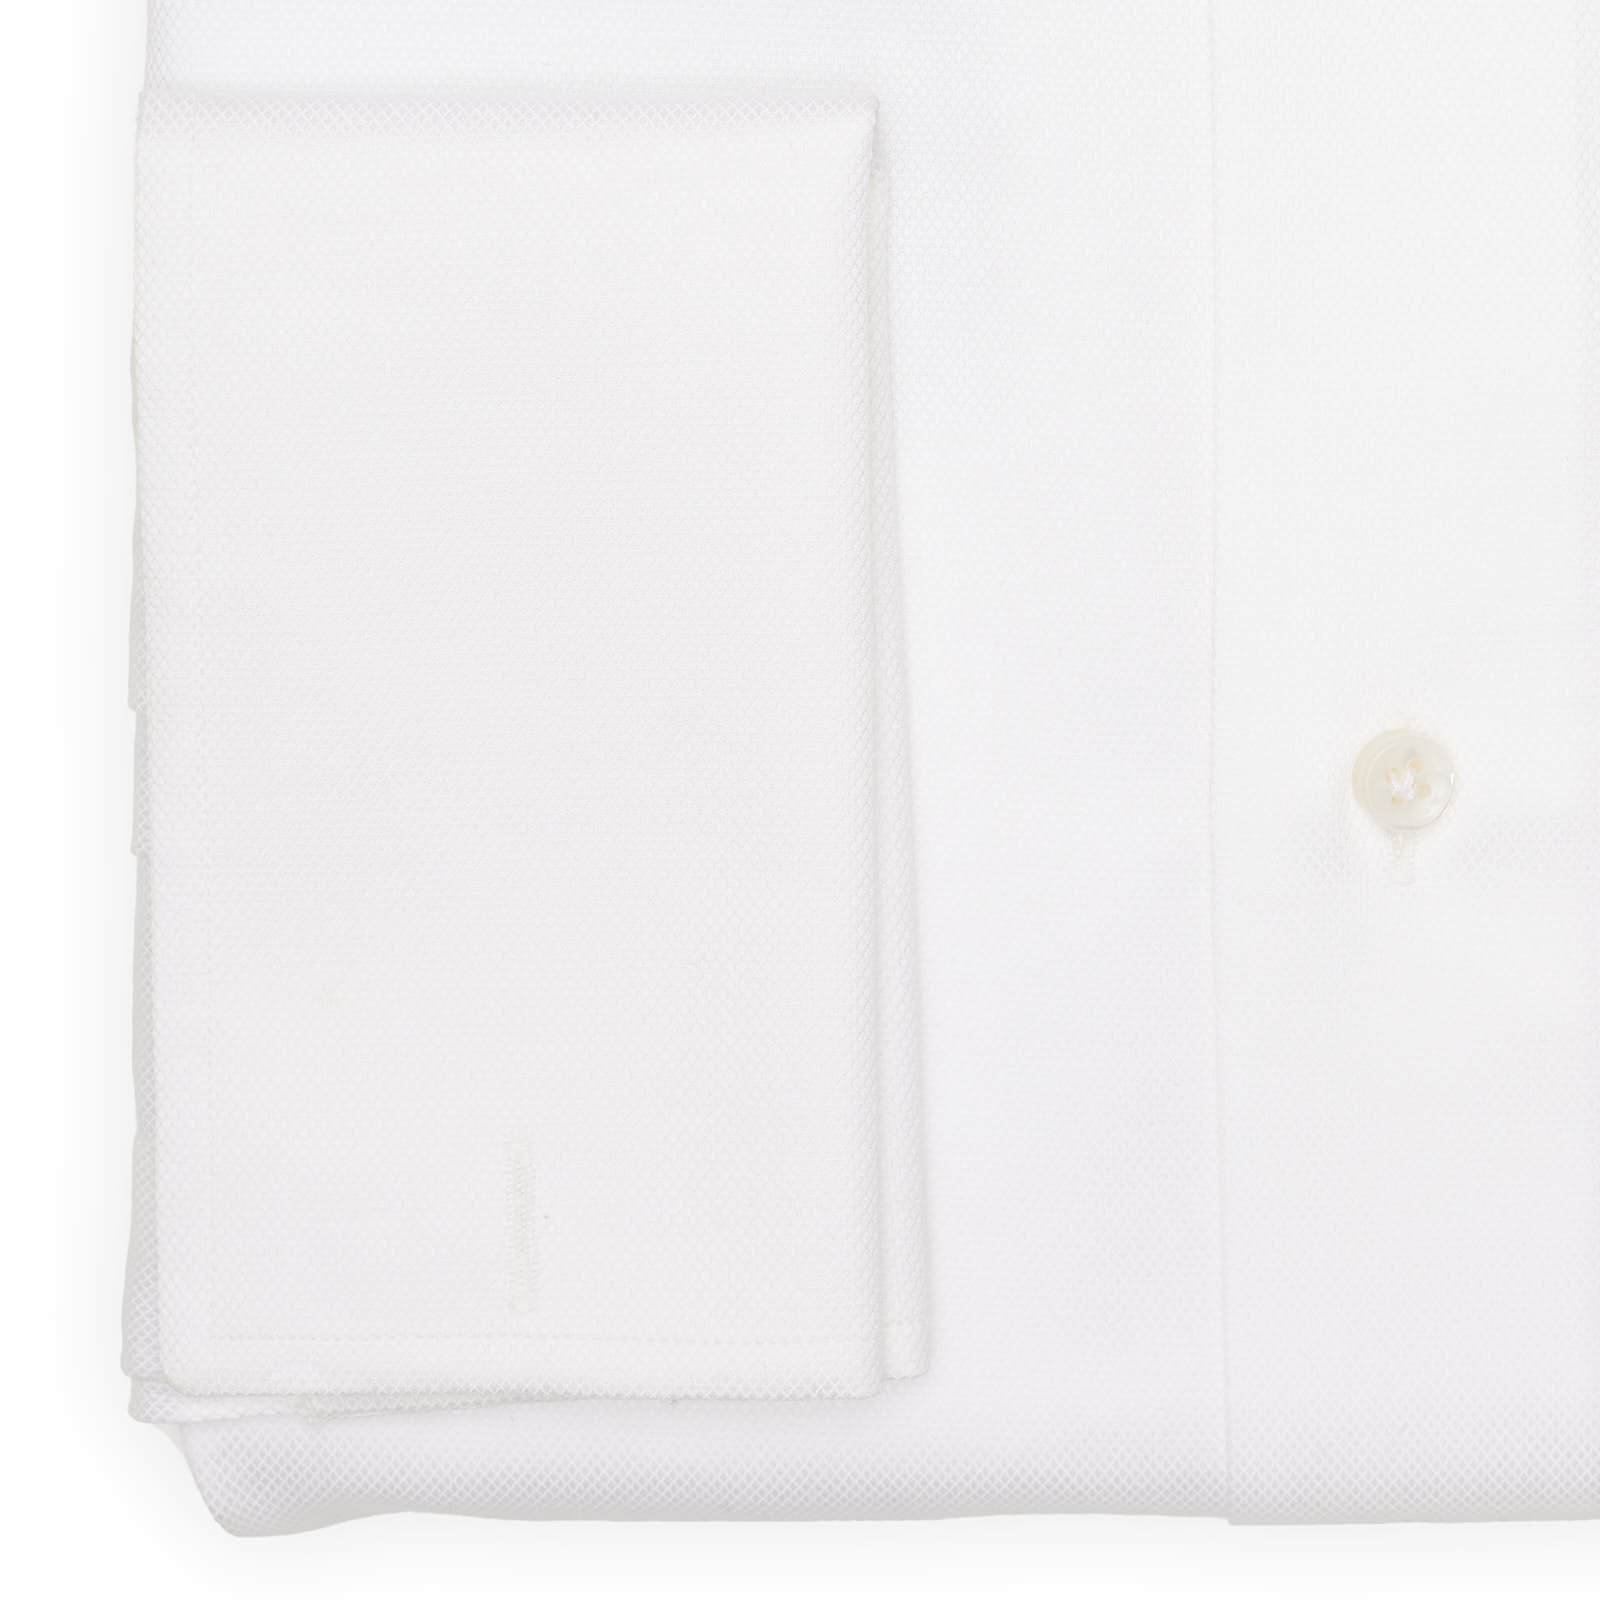 BARBA Napoli Handmade White Oxford Cotton French Cuff Dress Shirt EU 43 NEW US 17